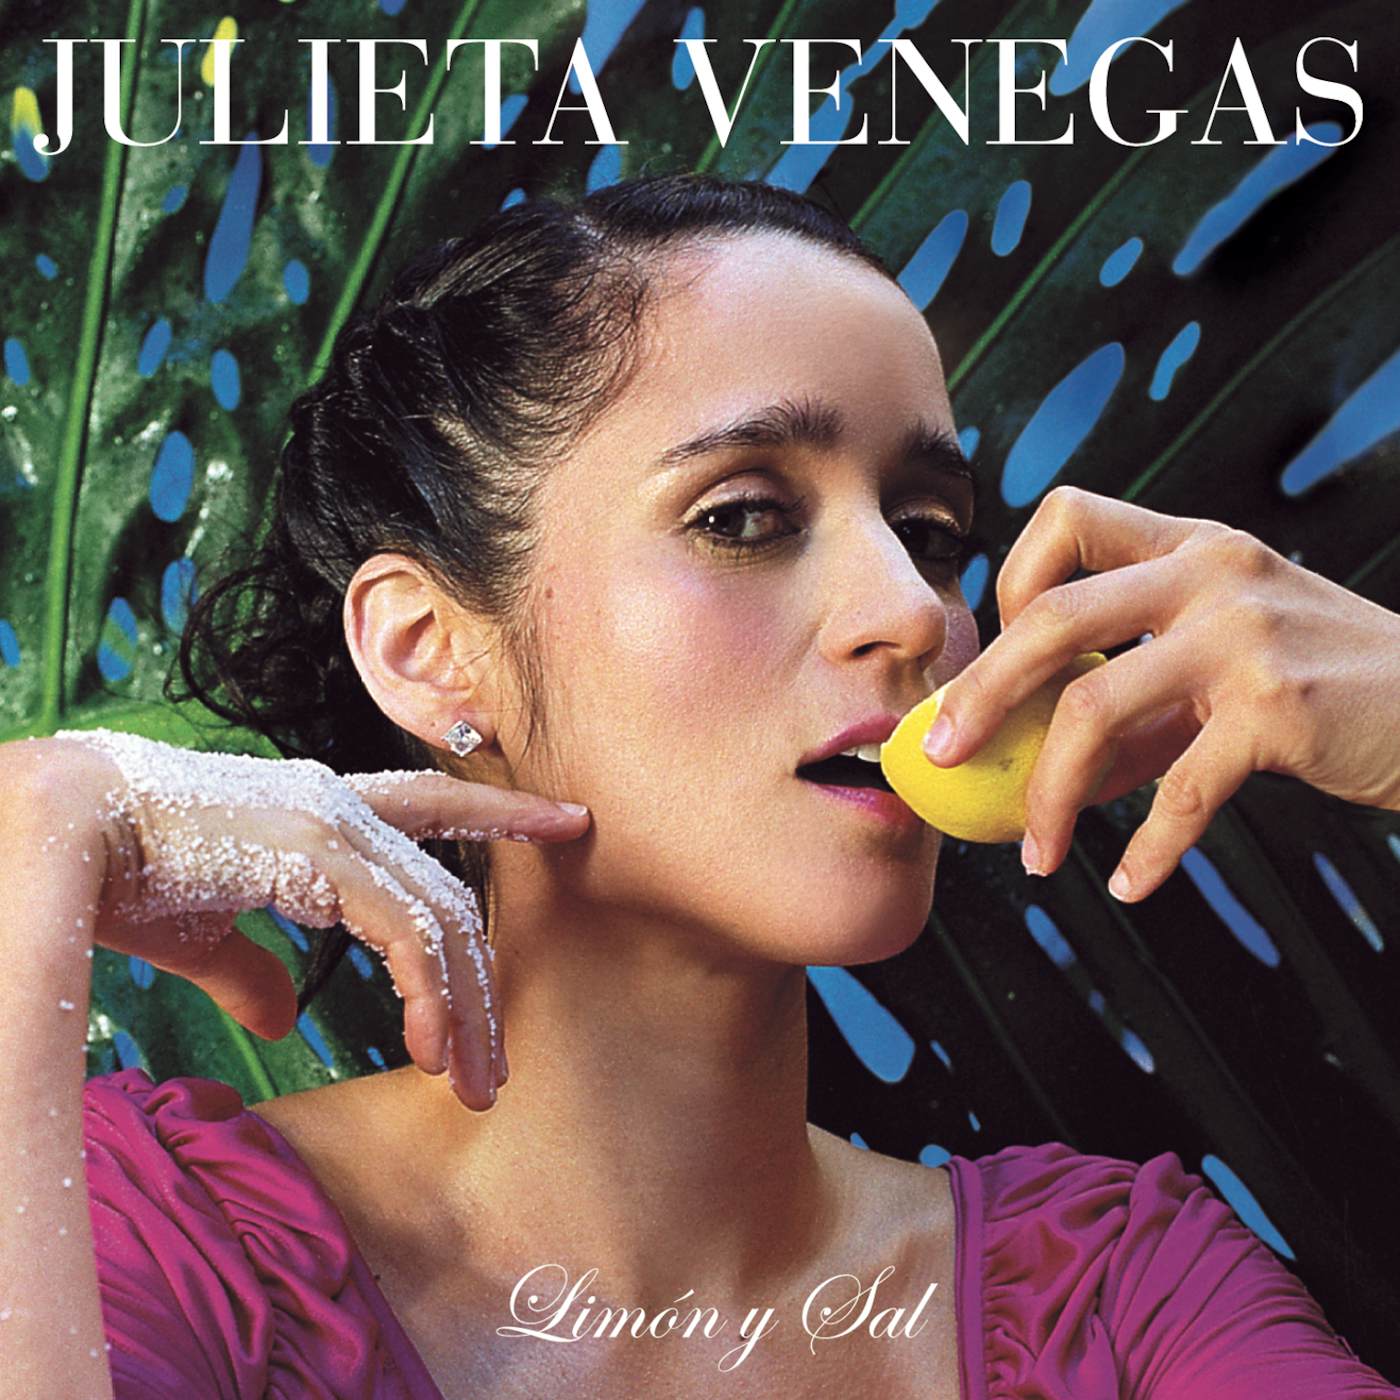 Julieta Venegas LIMON Y SAL CD